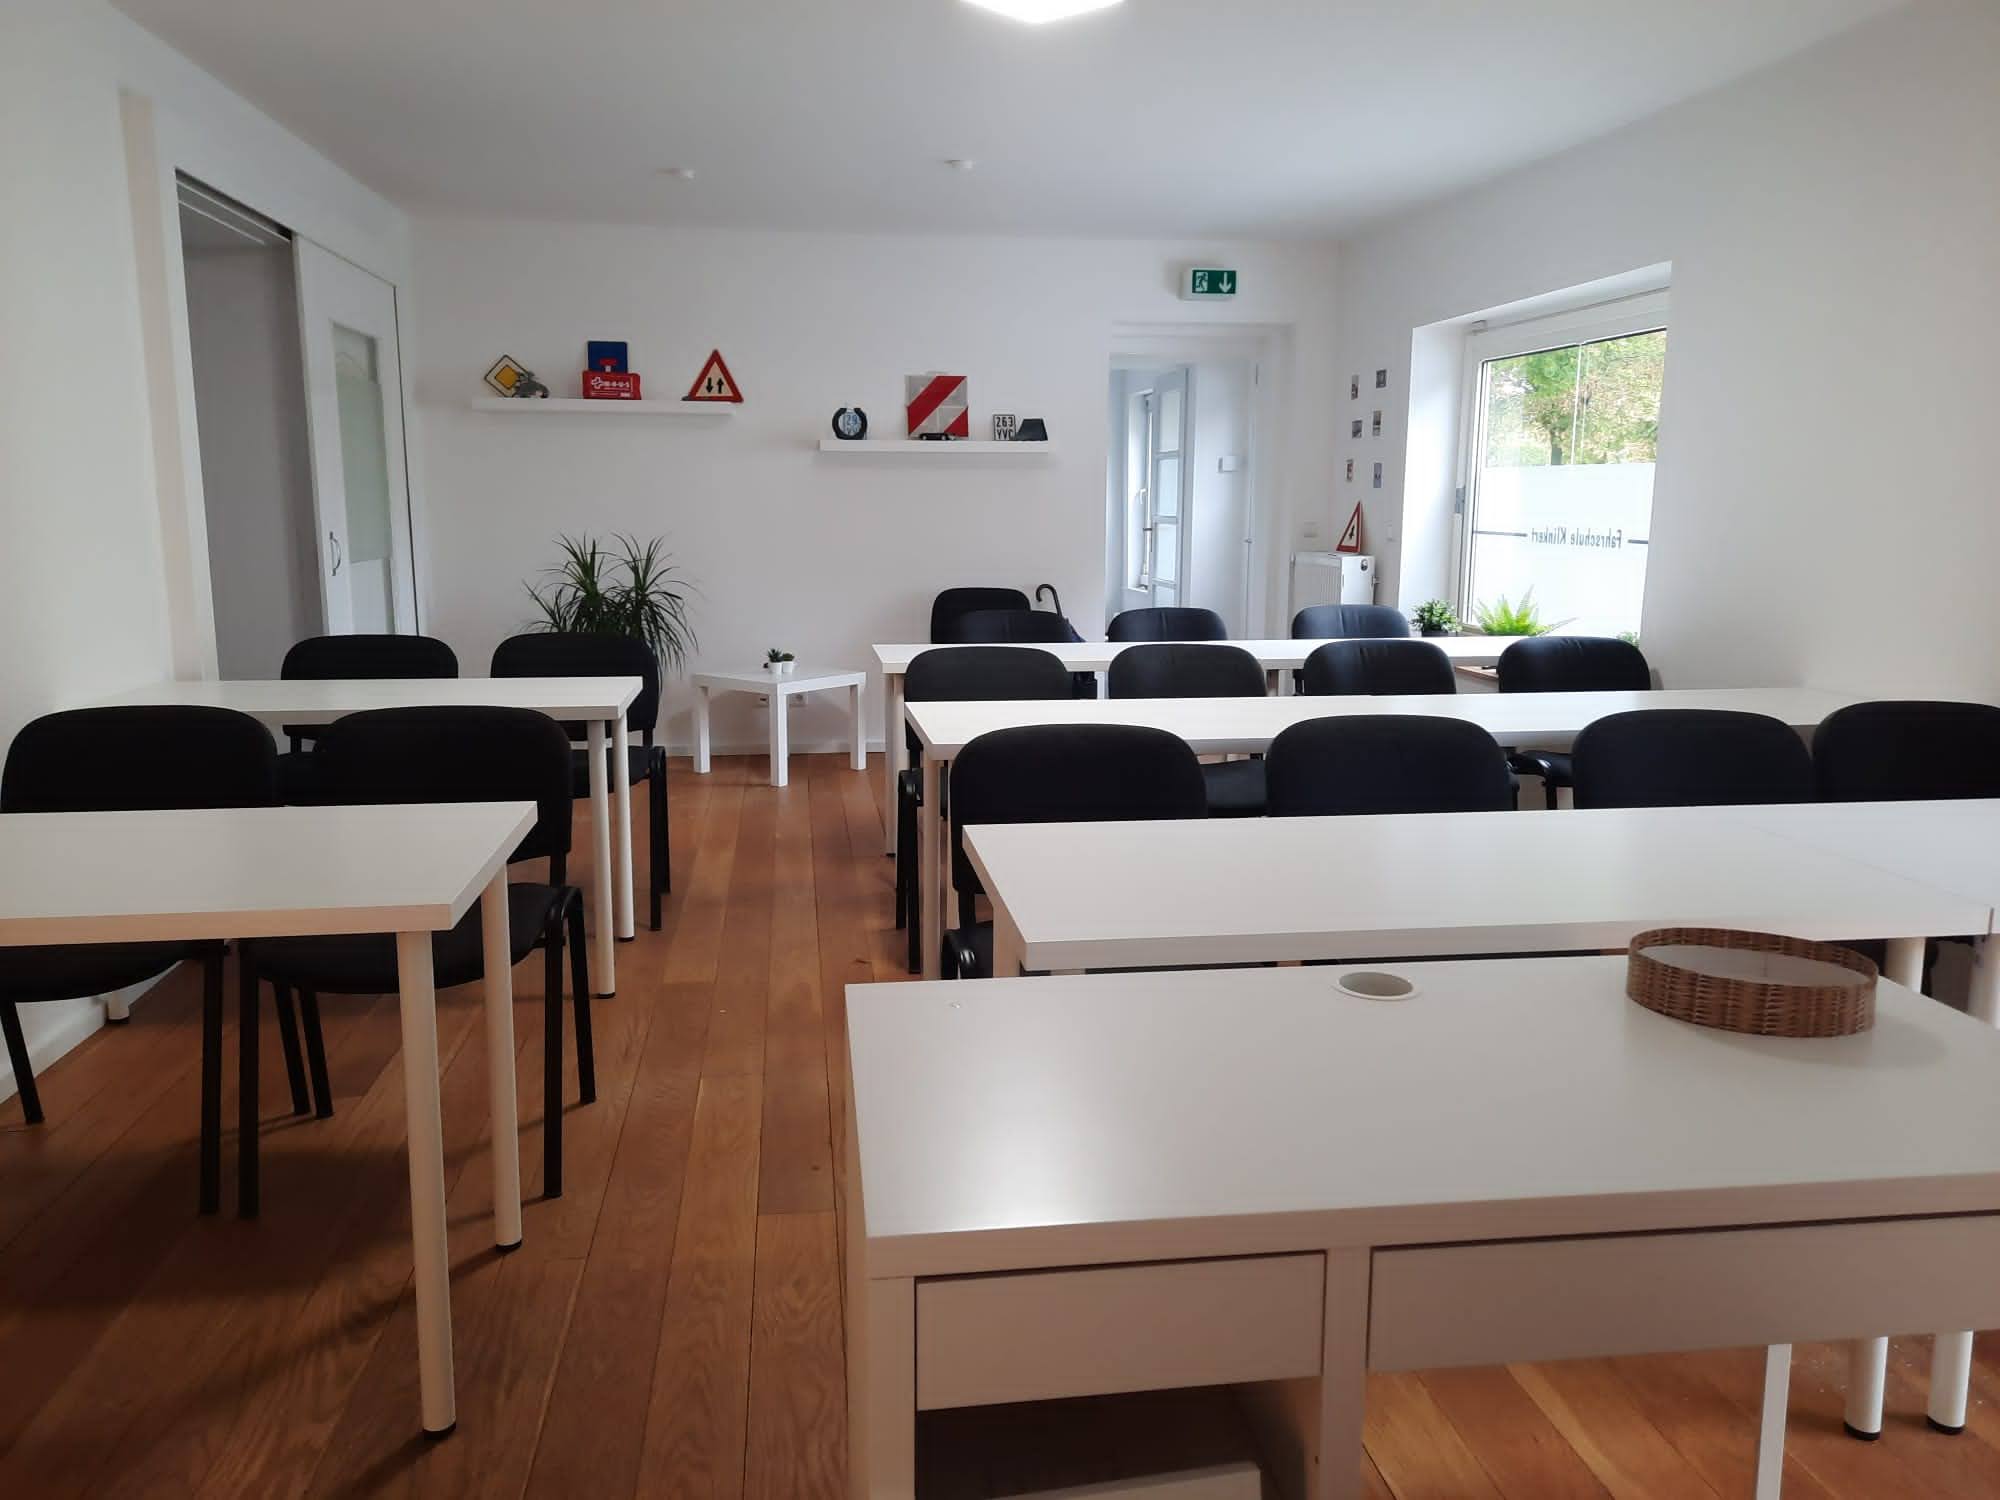 Unterrichtsraum der Fahrschule Klinkert in Celle